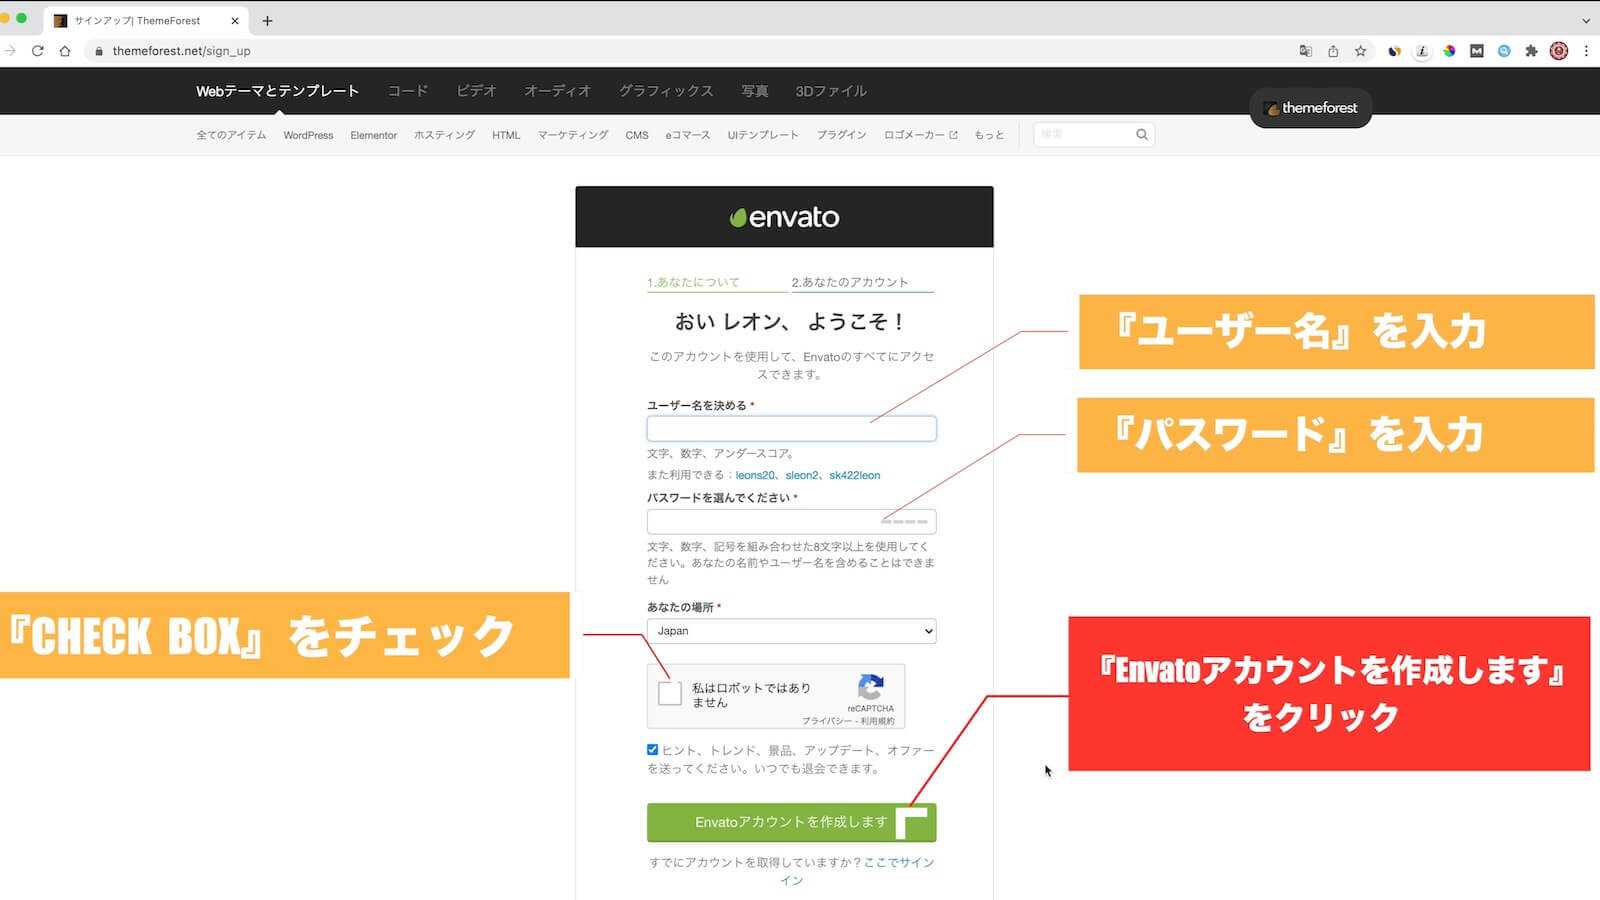 envato market user information registration screen